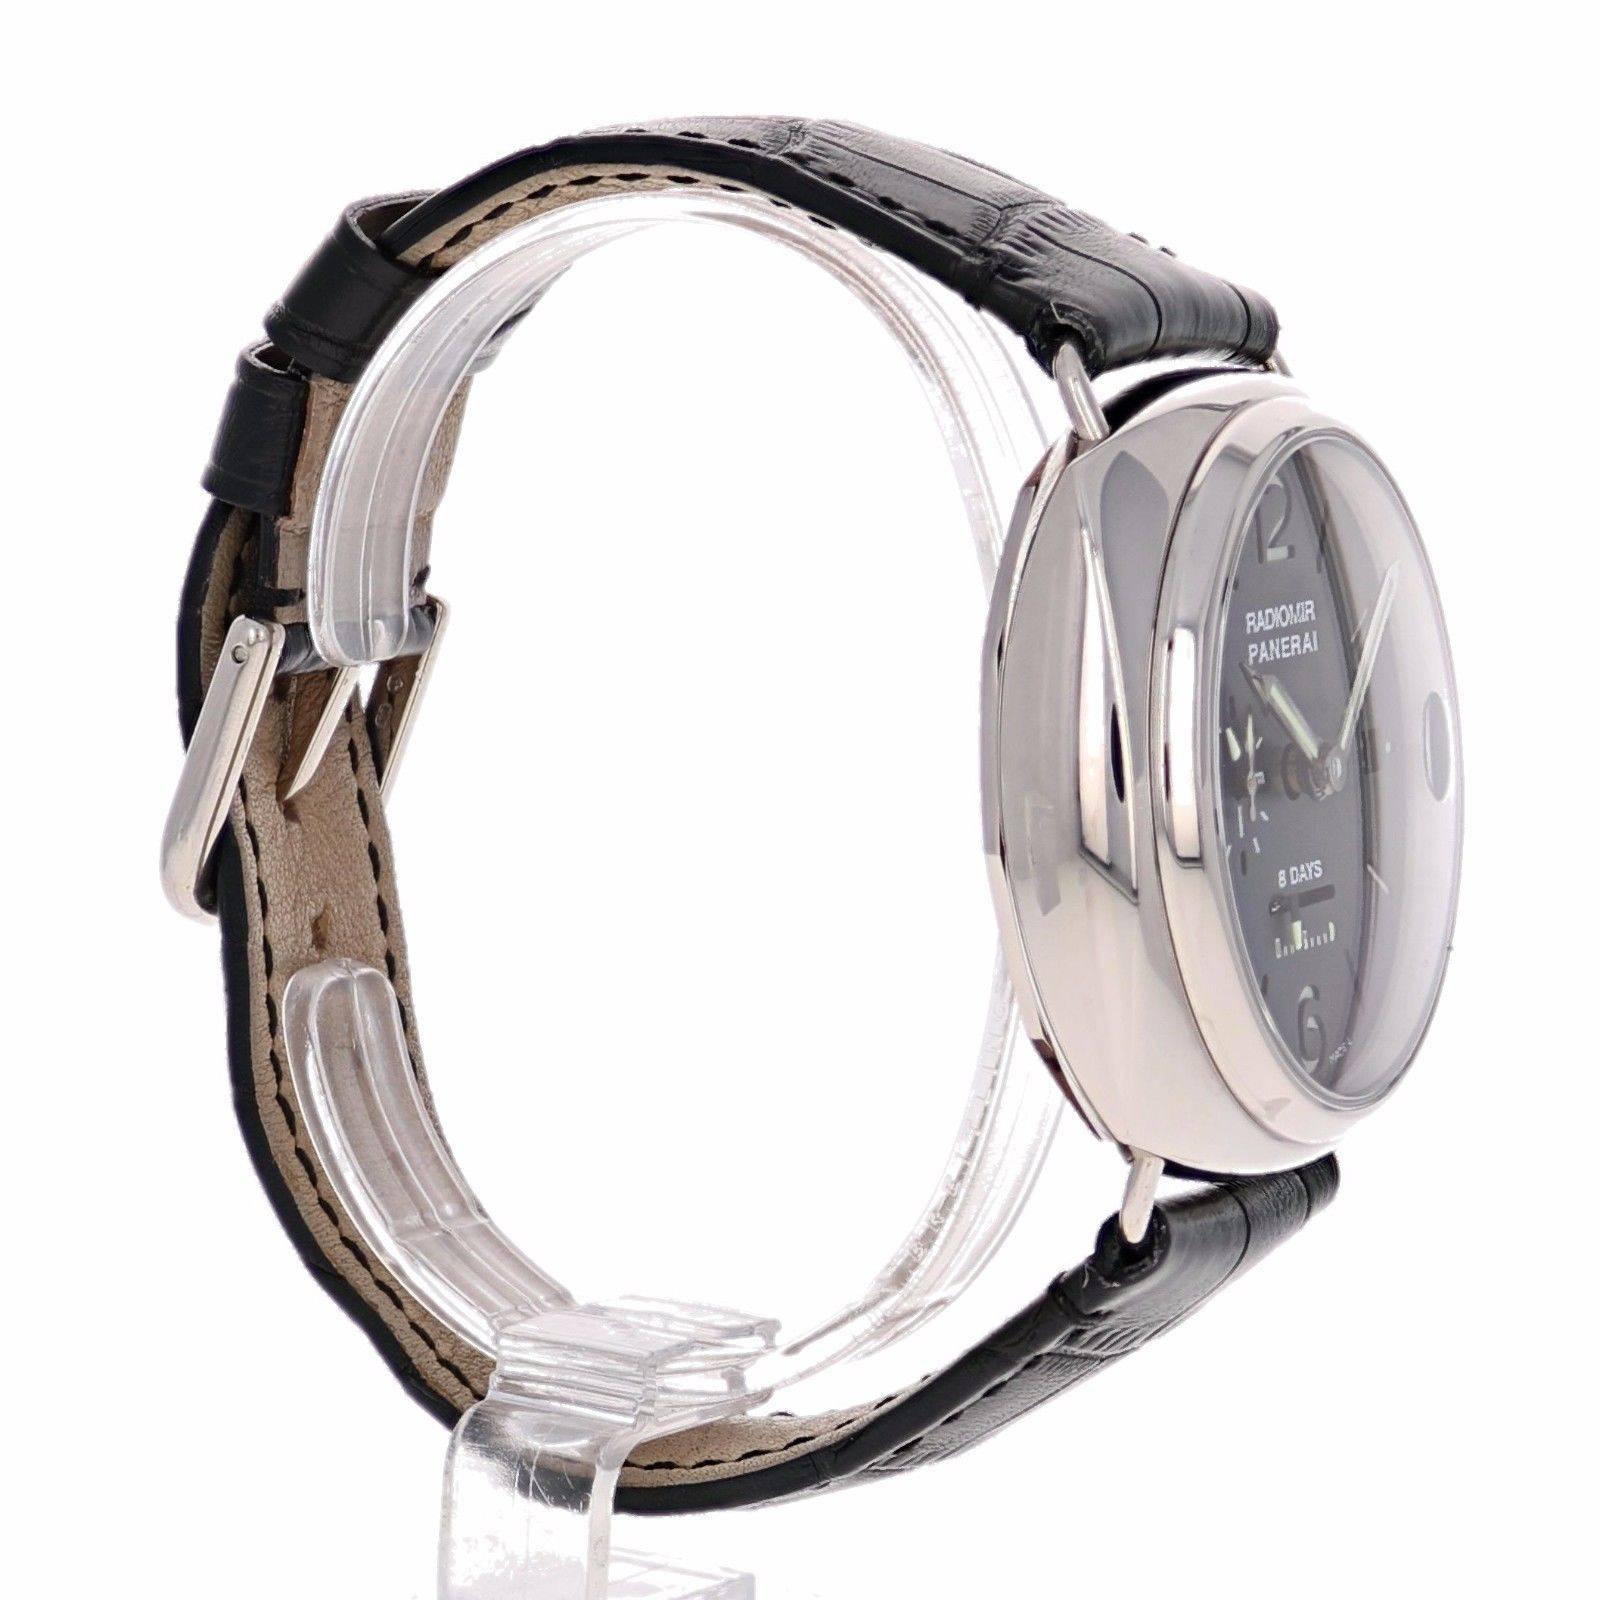 Panerai White Gold Radiomir Sp Edition 8 Days GMT PAM 200 Wristwatch 4